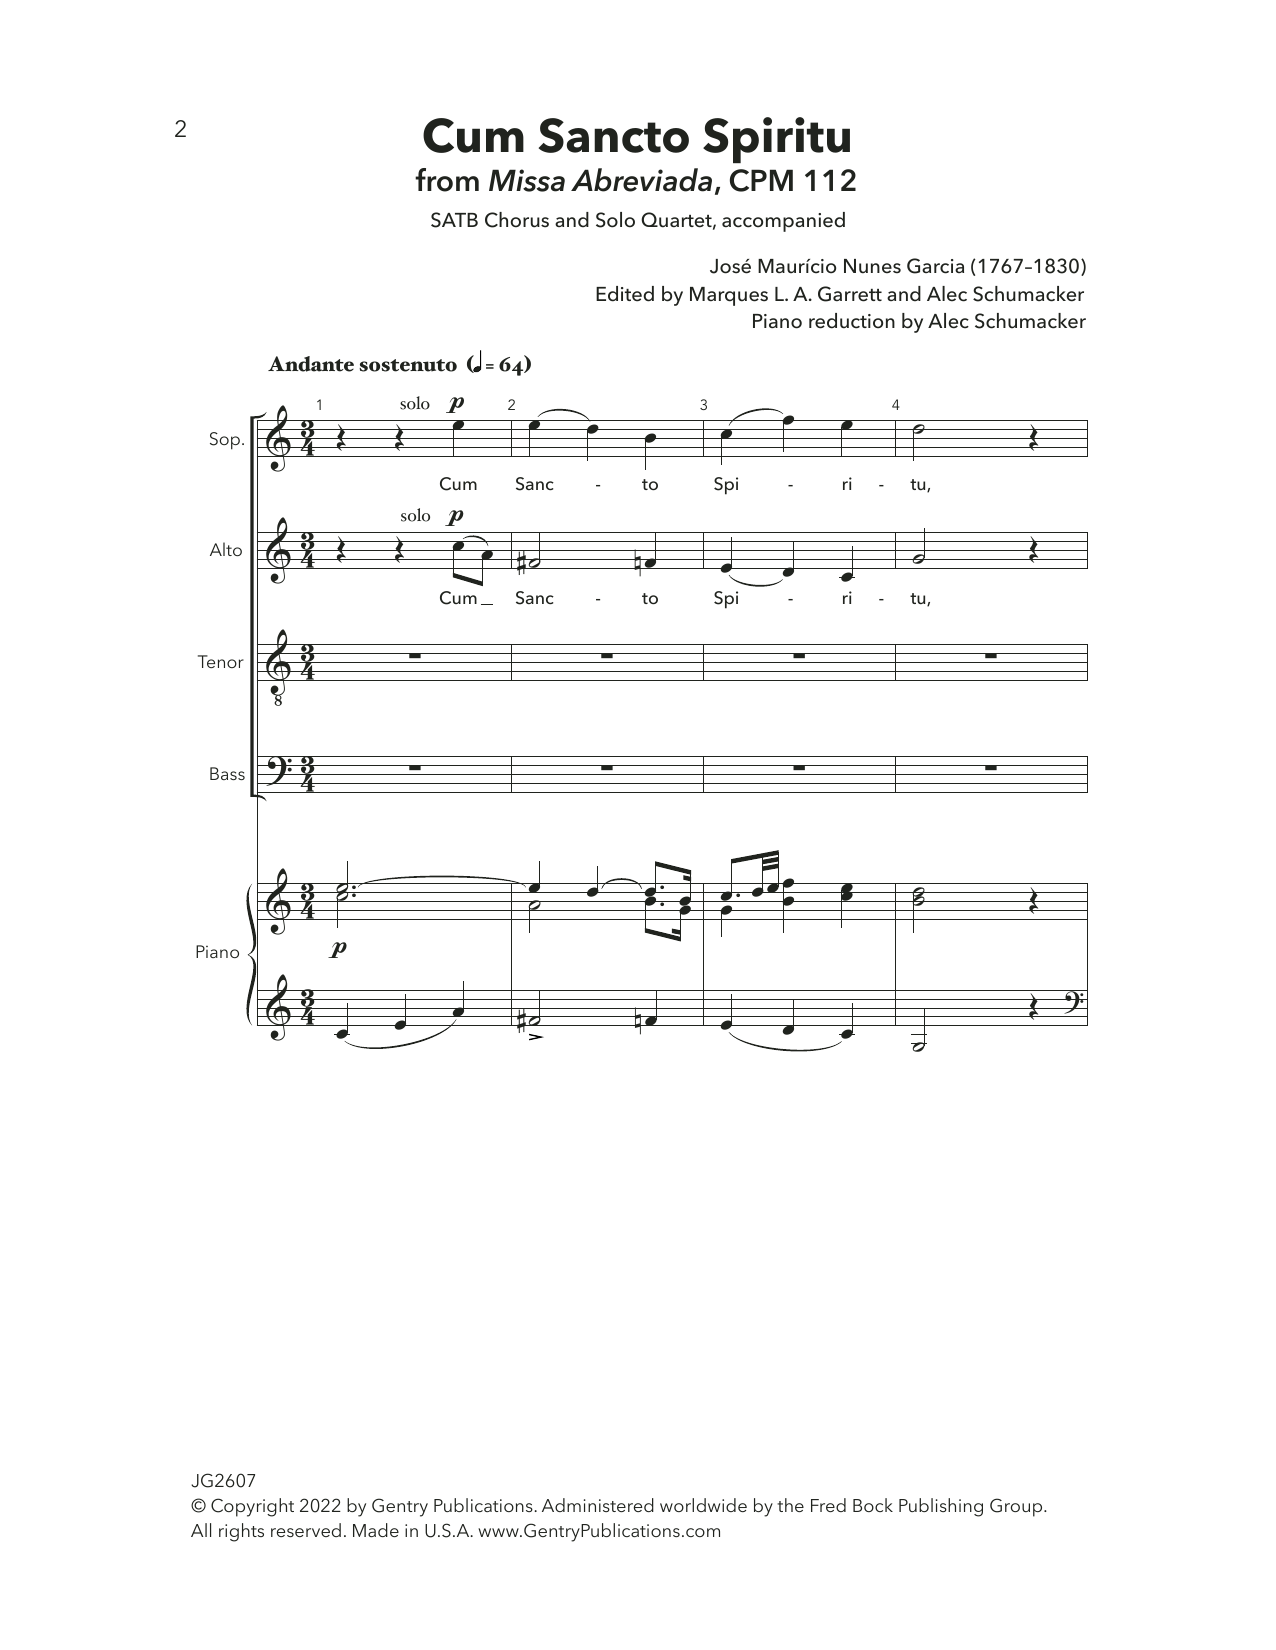 Download Alec Schumaker Cum Sancto Spiritu Sheet Music and learn how to play Choir PDF digital score in minutes